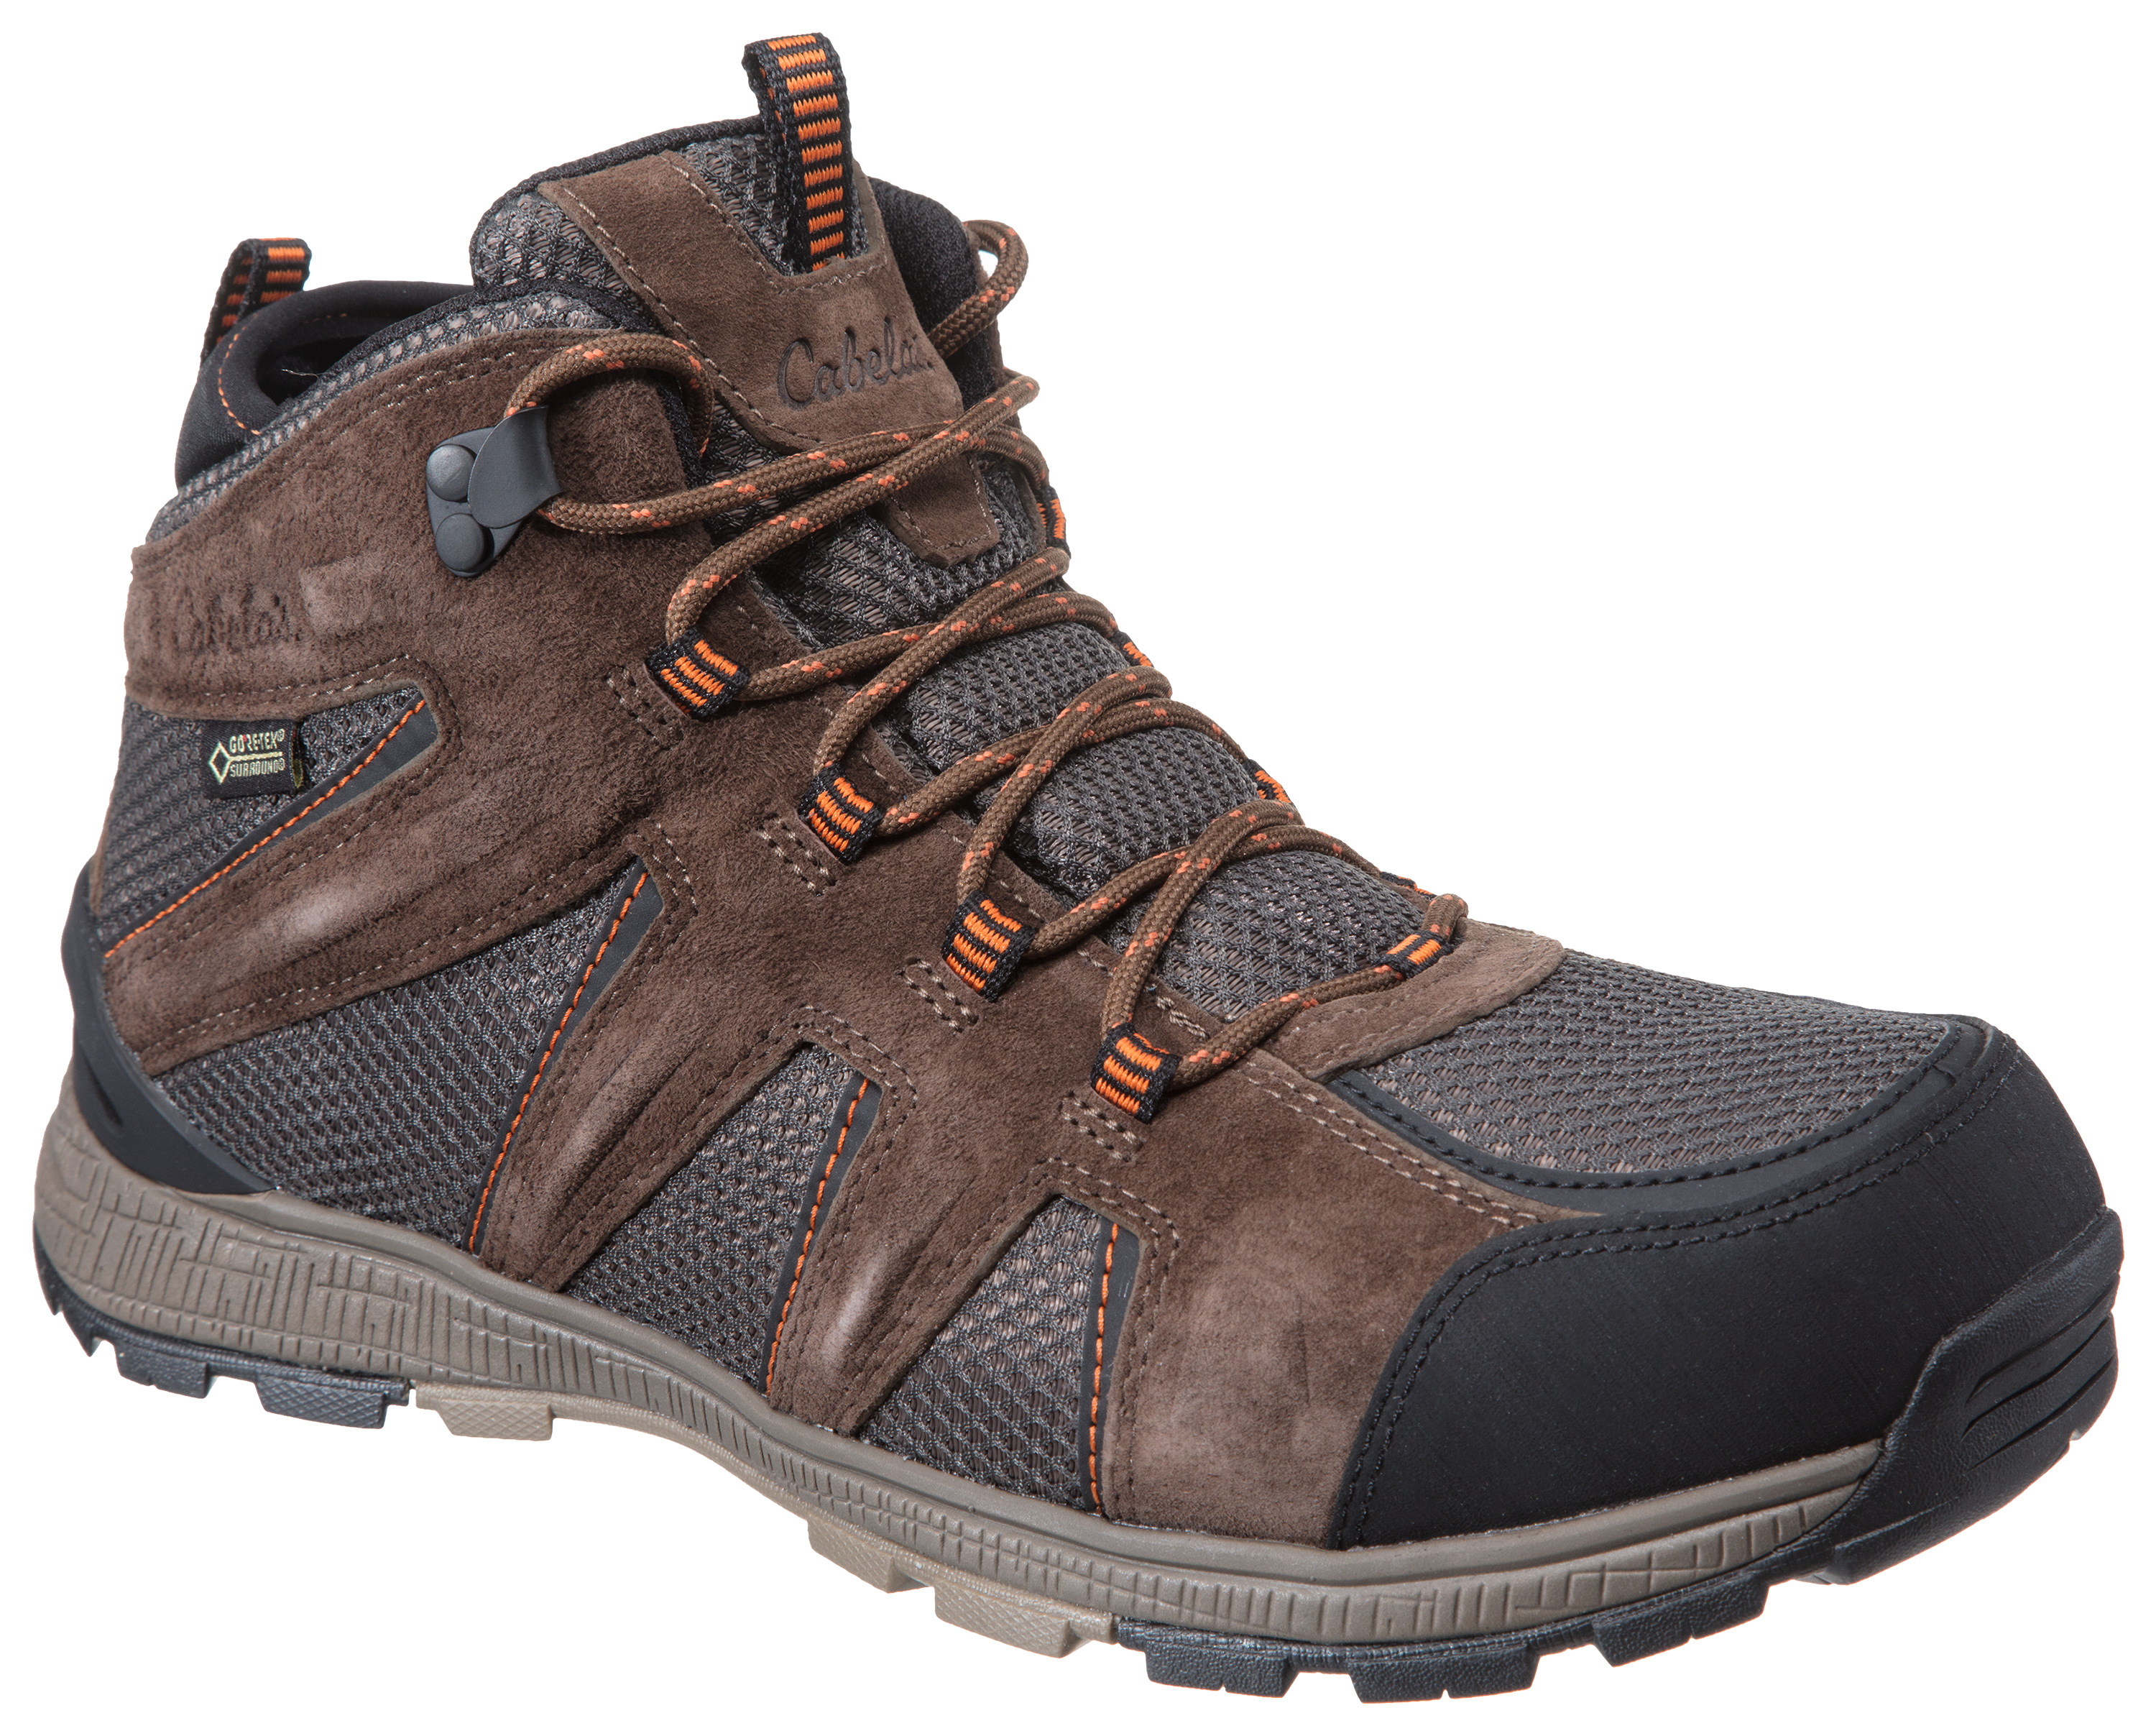 Cabela's 360 Mid GORE-TEX Hiking Boots for Men - Teak - 10.5M